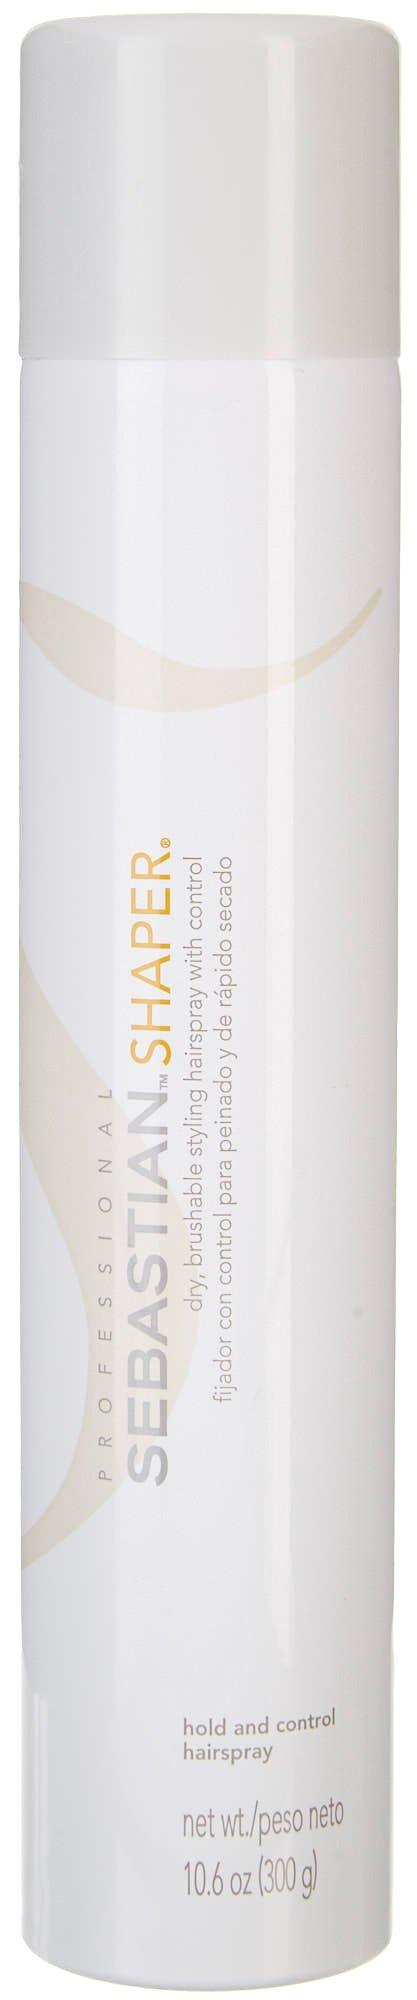 Sebastian Shaper Dry Easy Brush Styling Hairspray 10.6 oz.